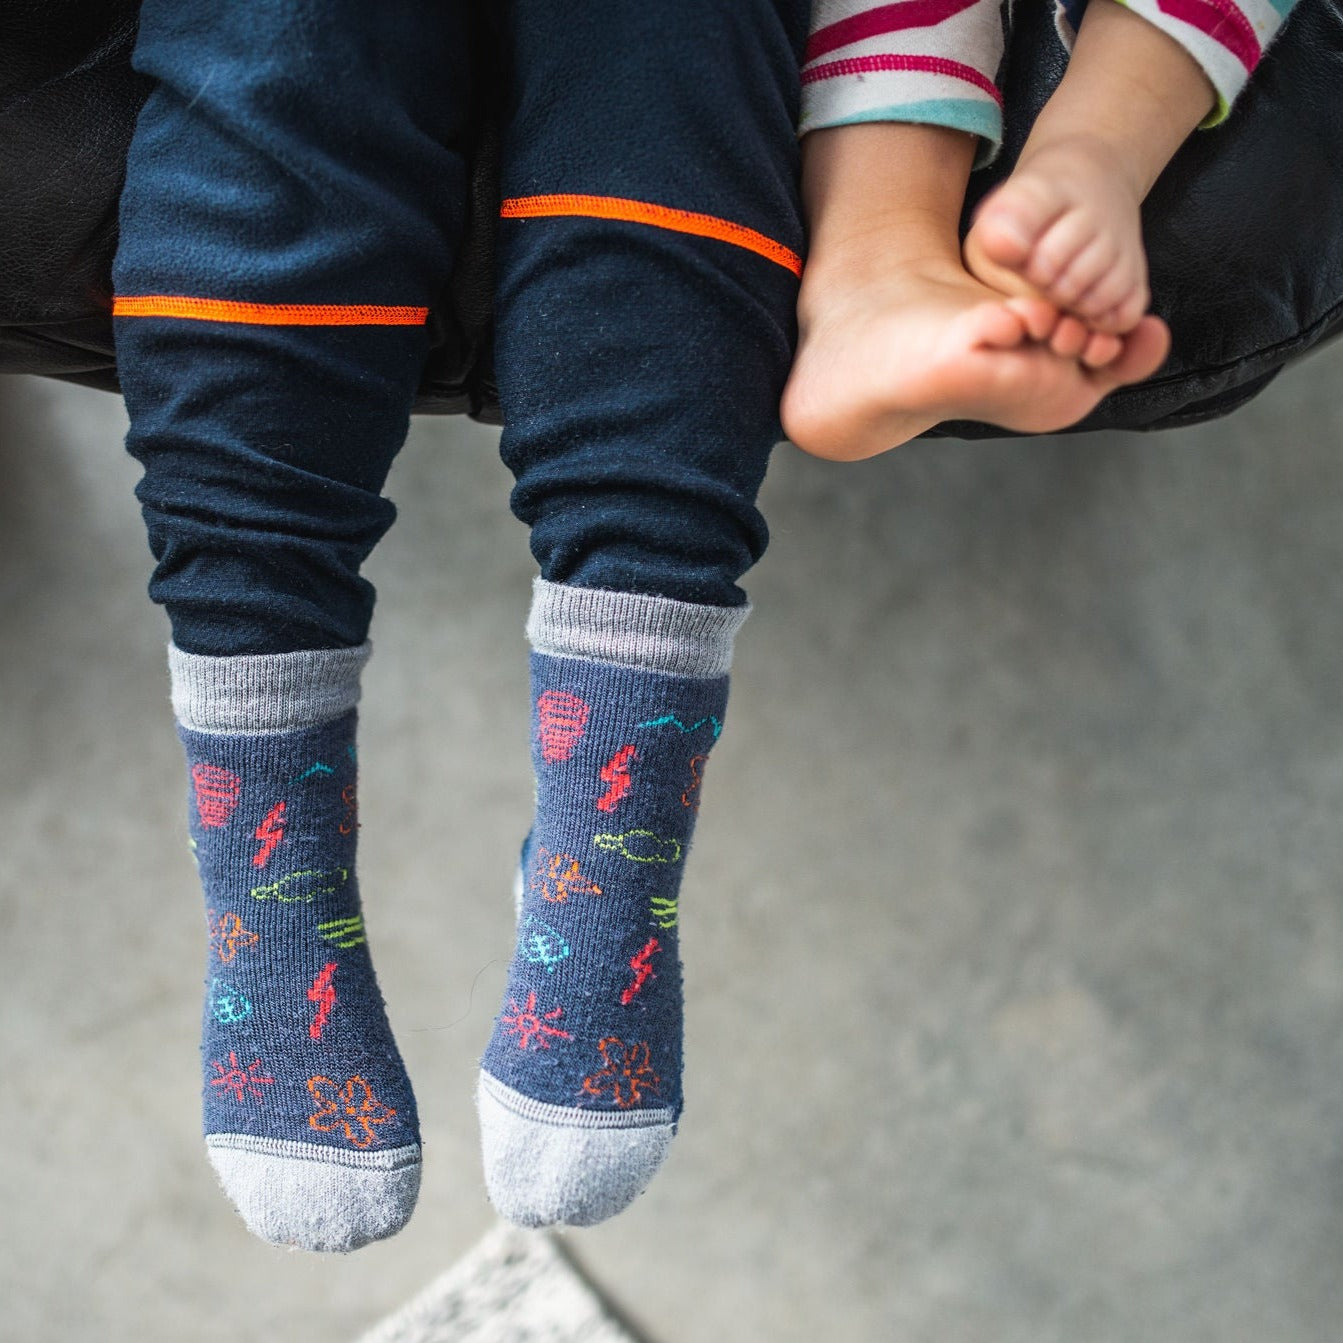 Cute socks (for kids)